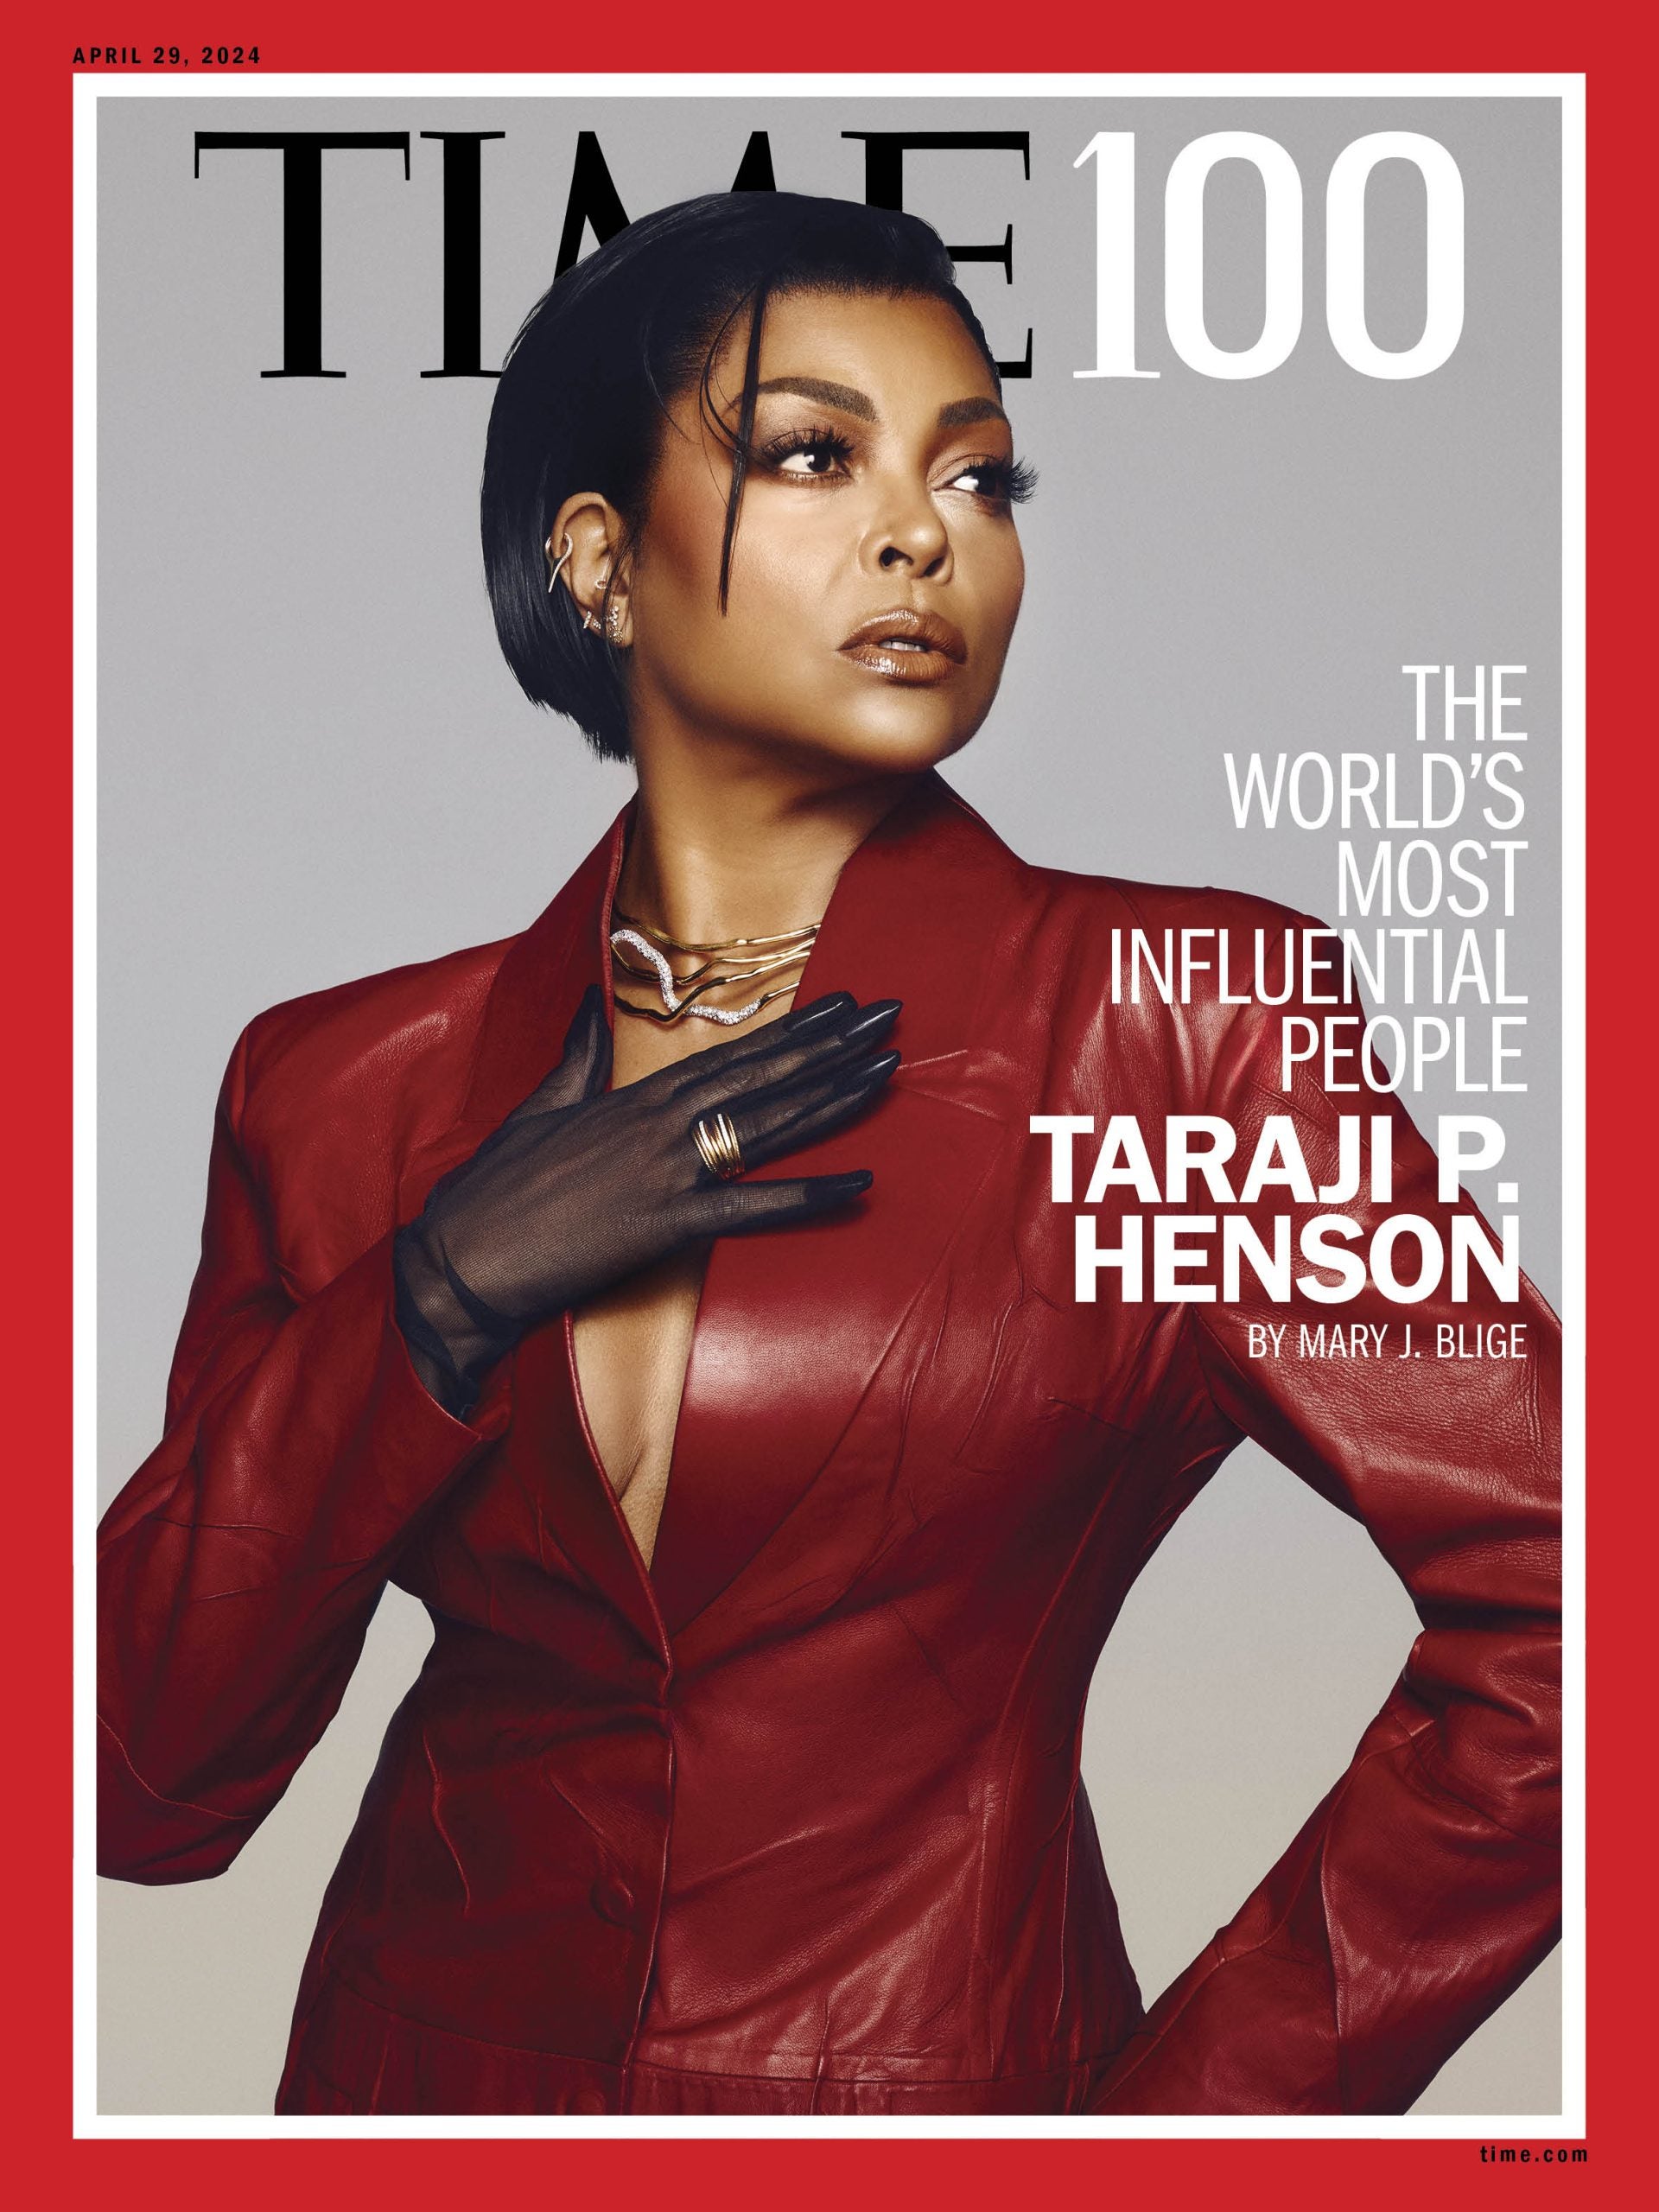 Da’Vine Joy Randolph, Jeffrey Wright, Fantasia Barrino, and More Named Among TIME 100 Most Influential